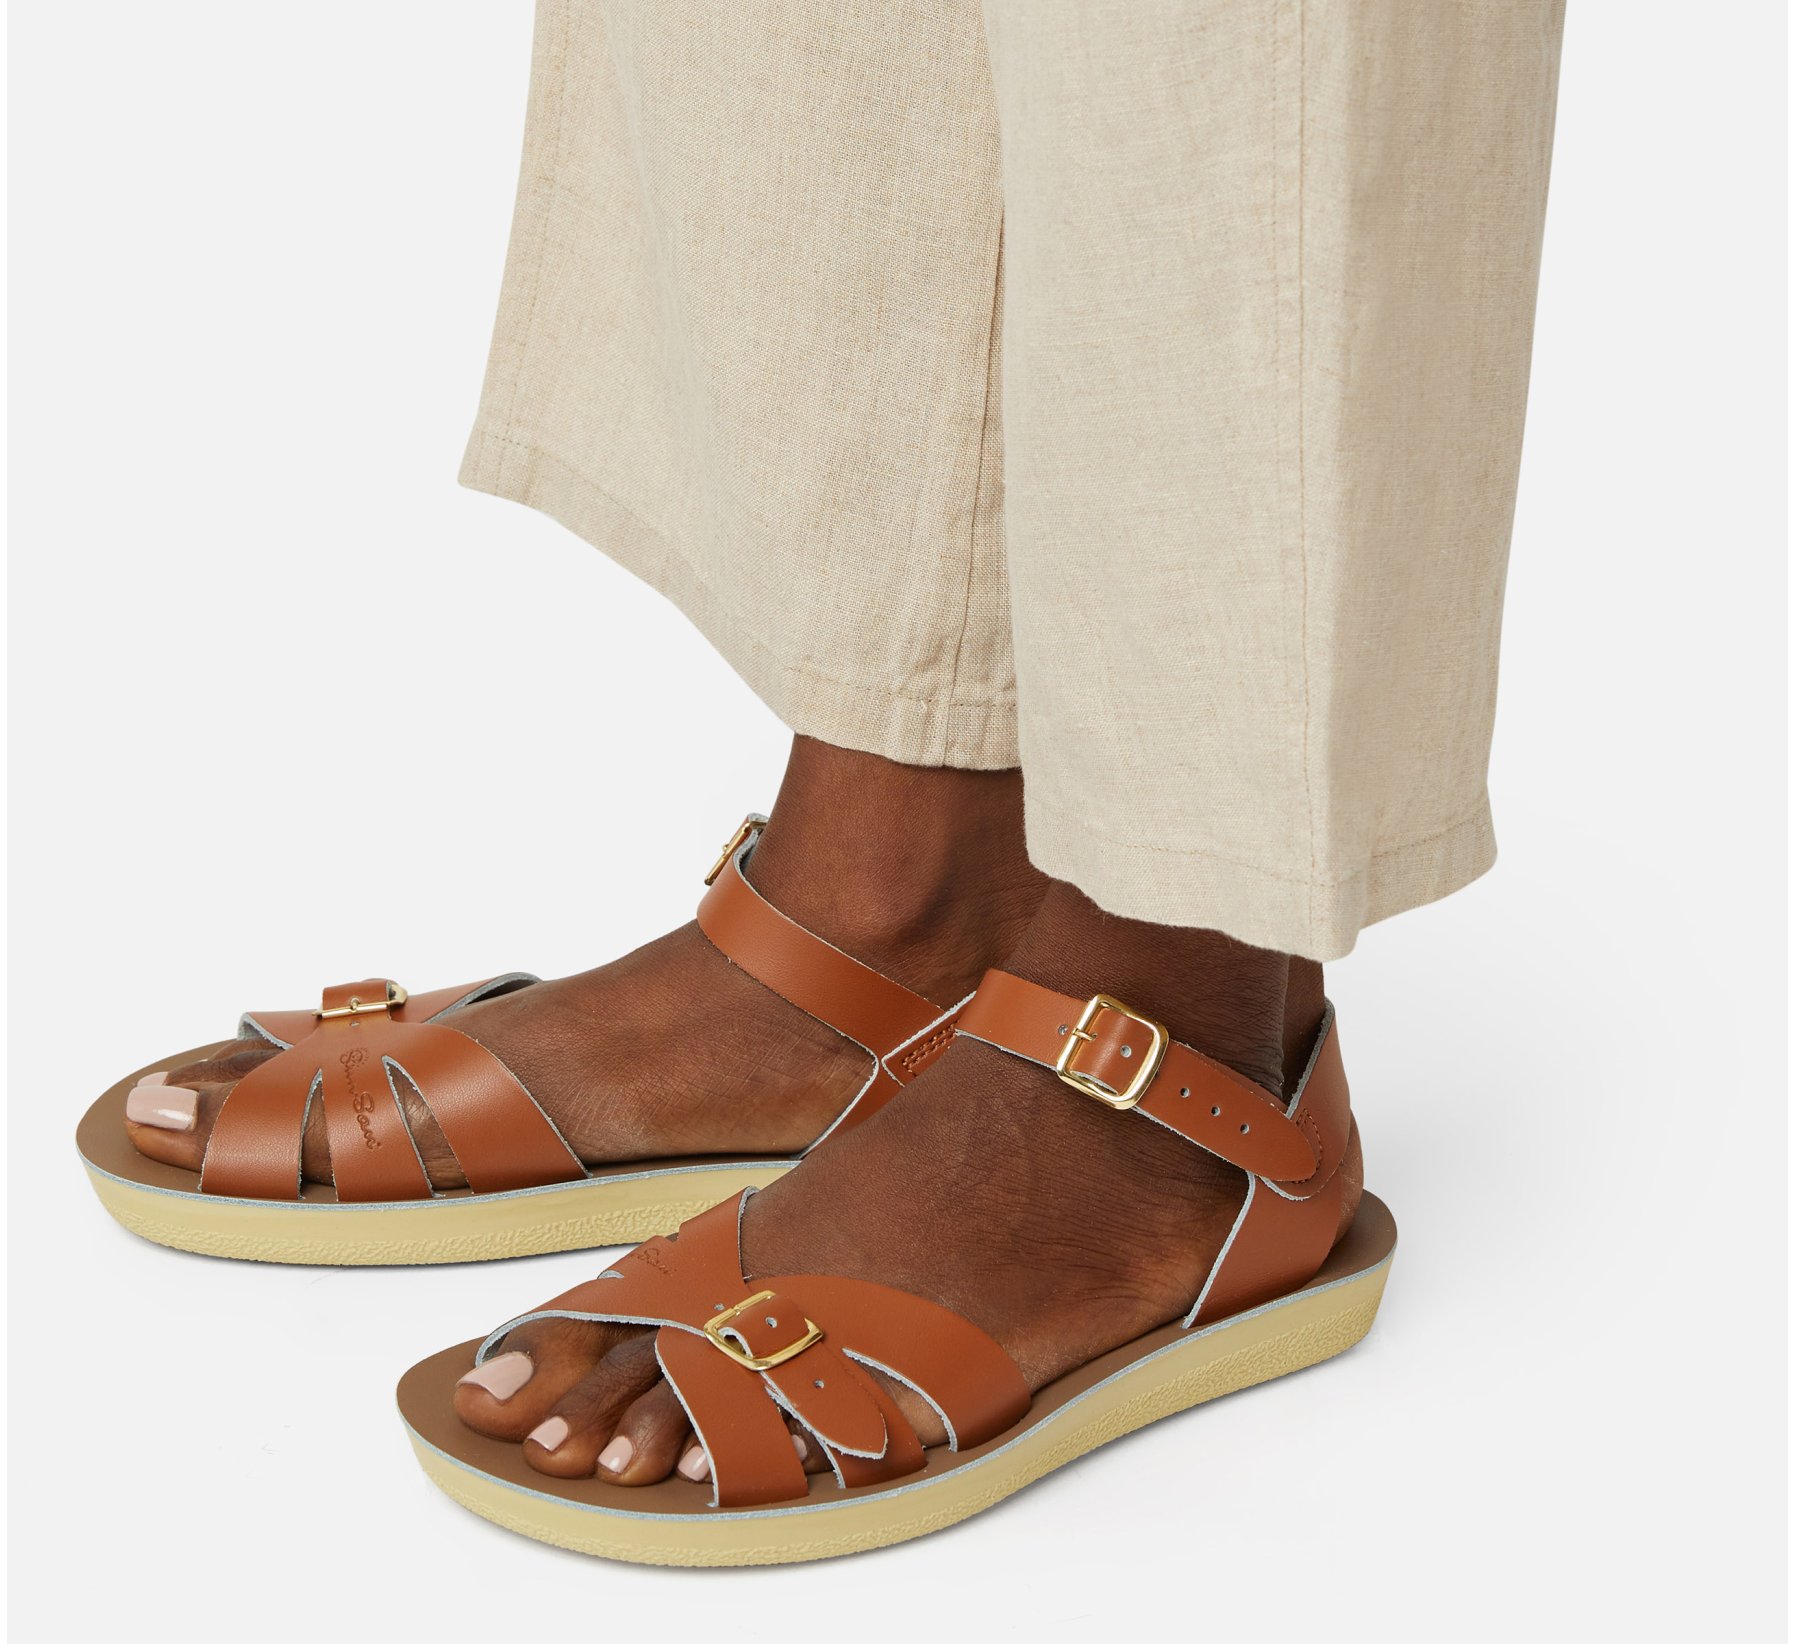 Boardwalk Tan - Salt Water Sandals